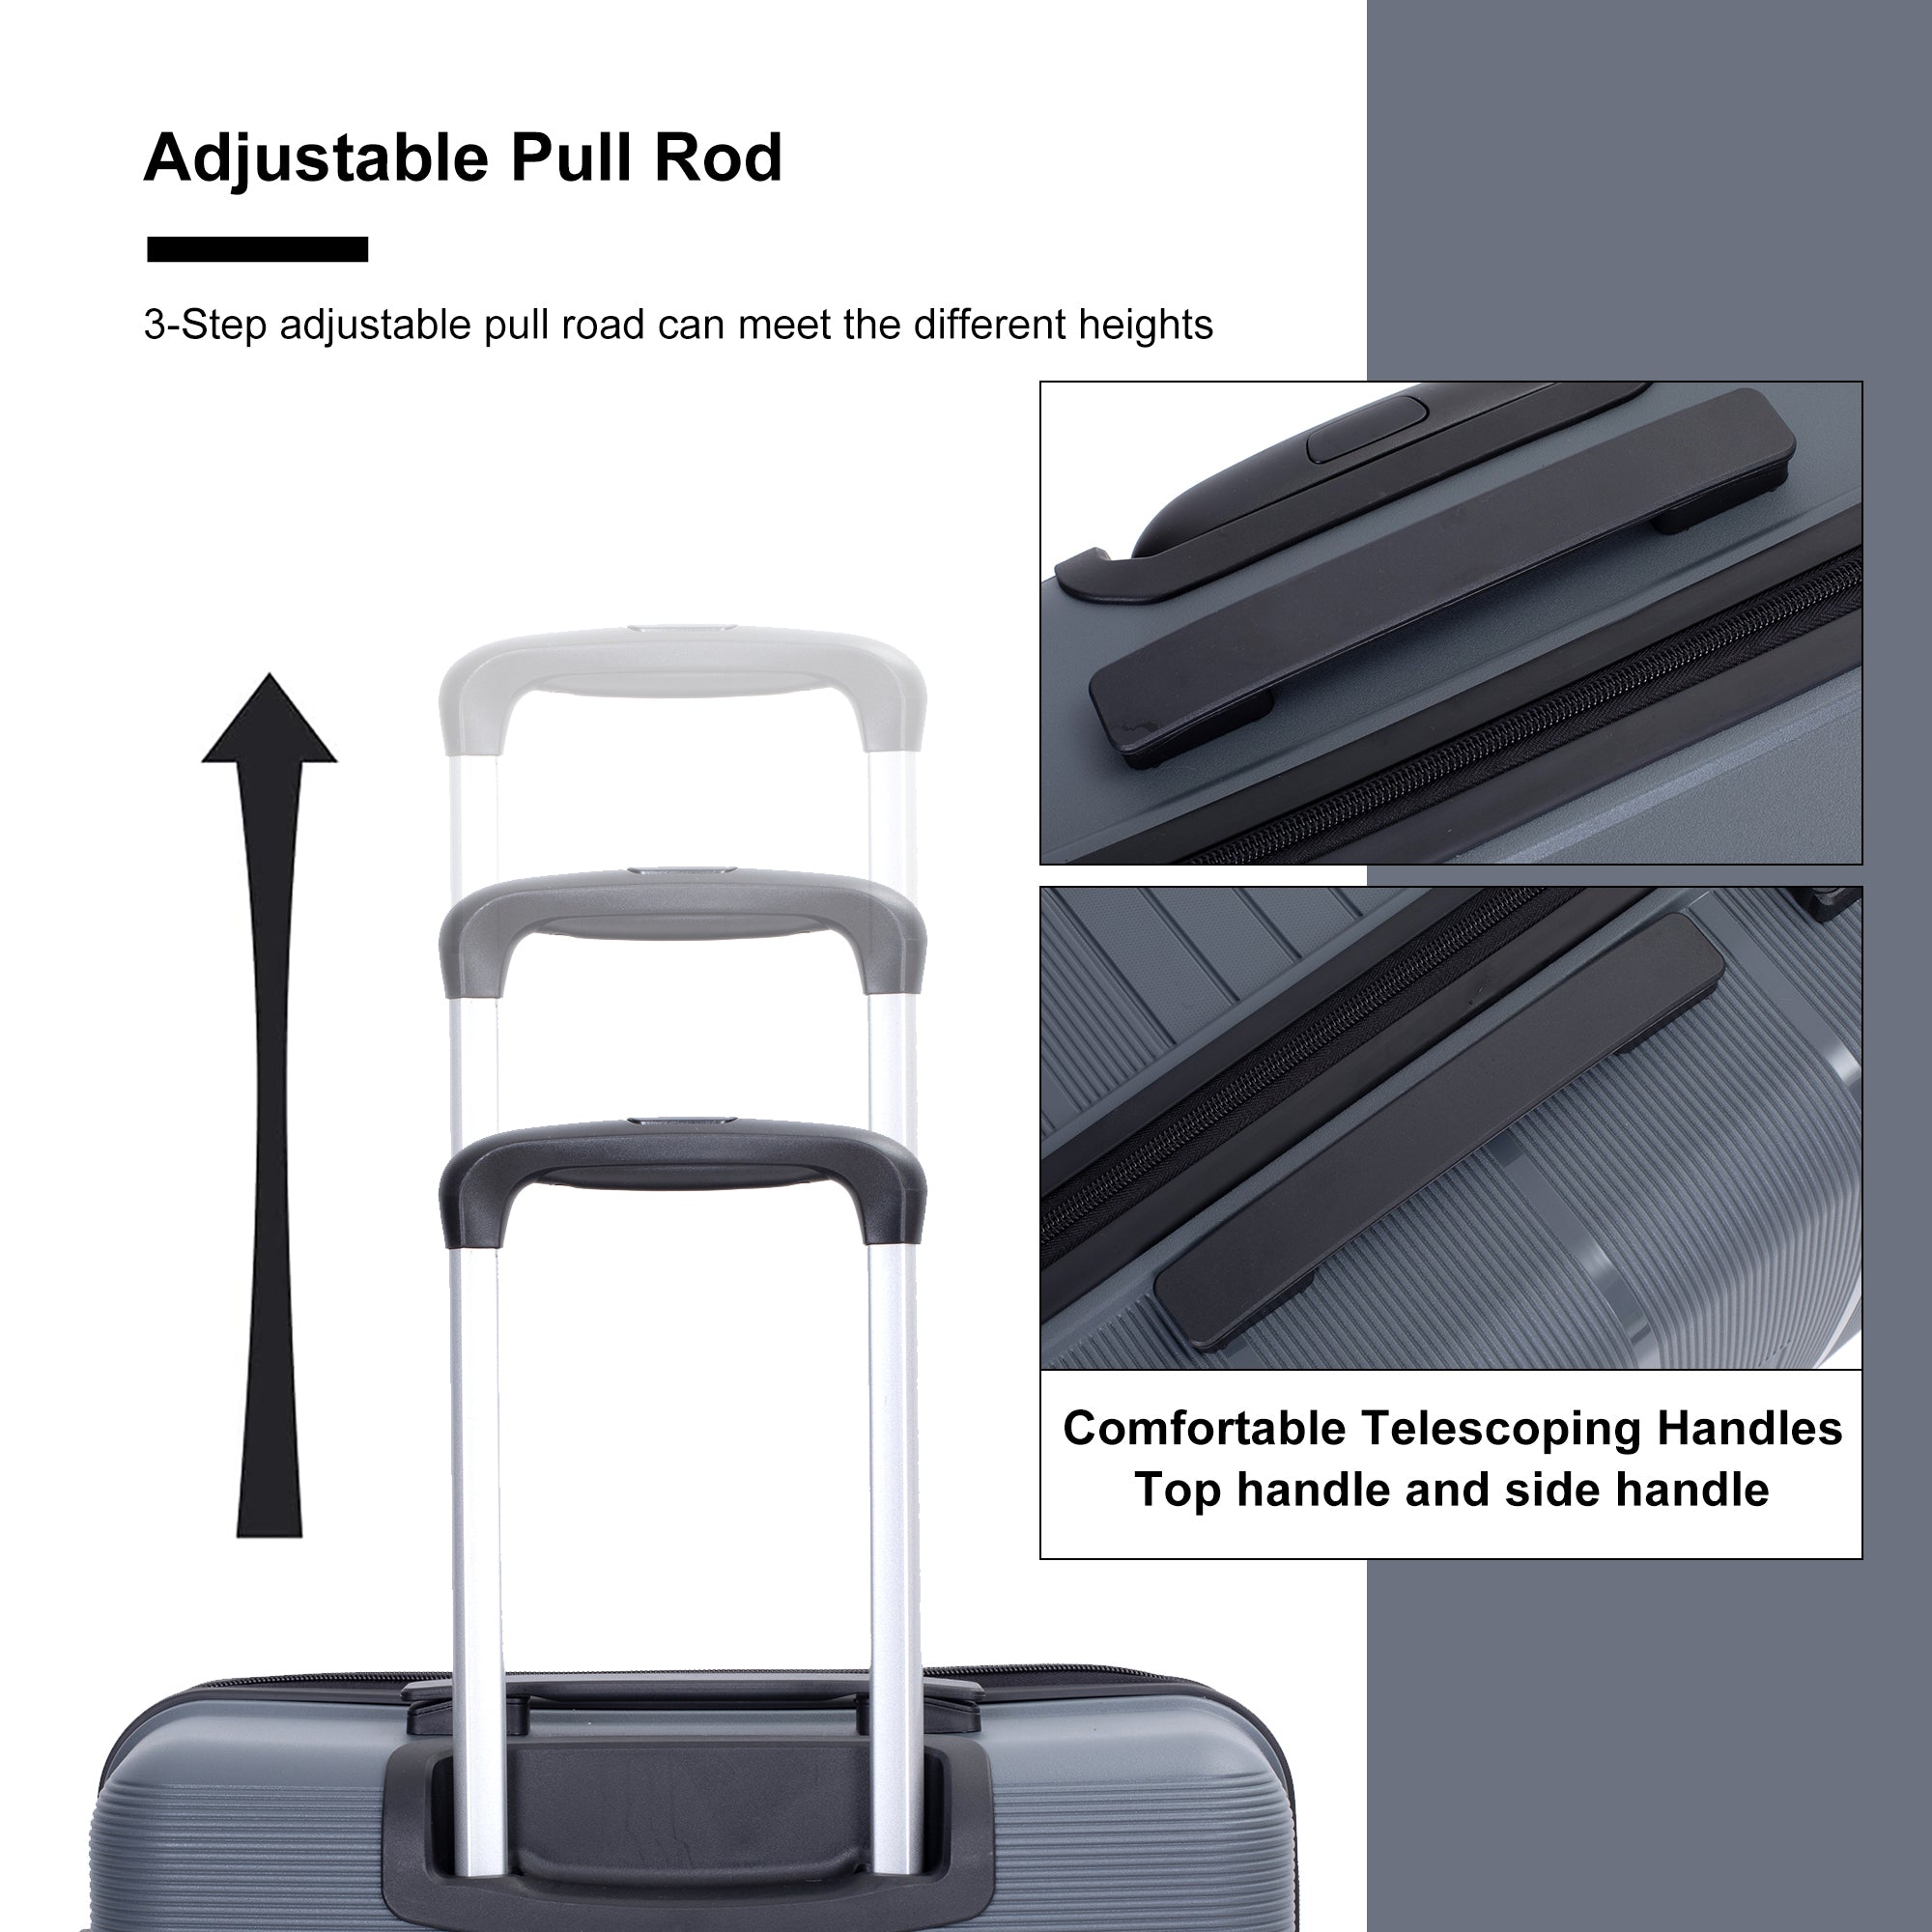 Hardshell Suitcase Double Spinner Wheels PP Luggage gray-polypropylene